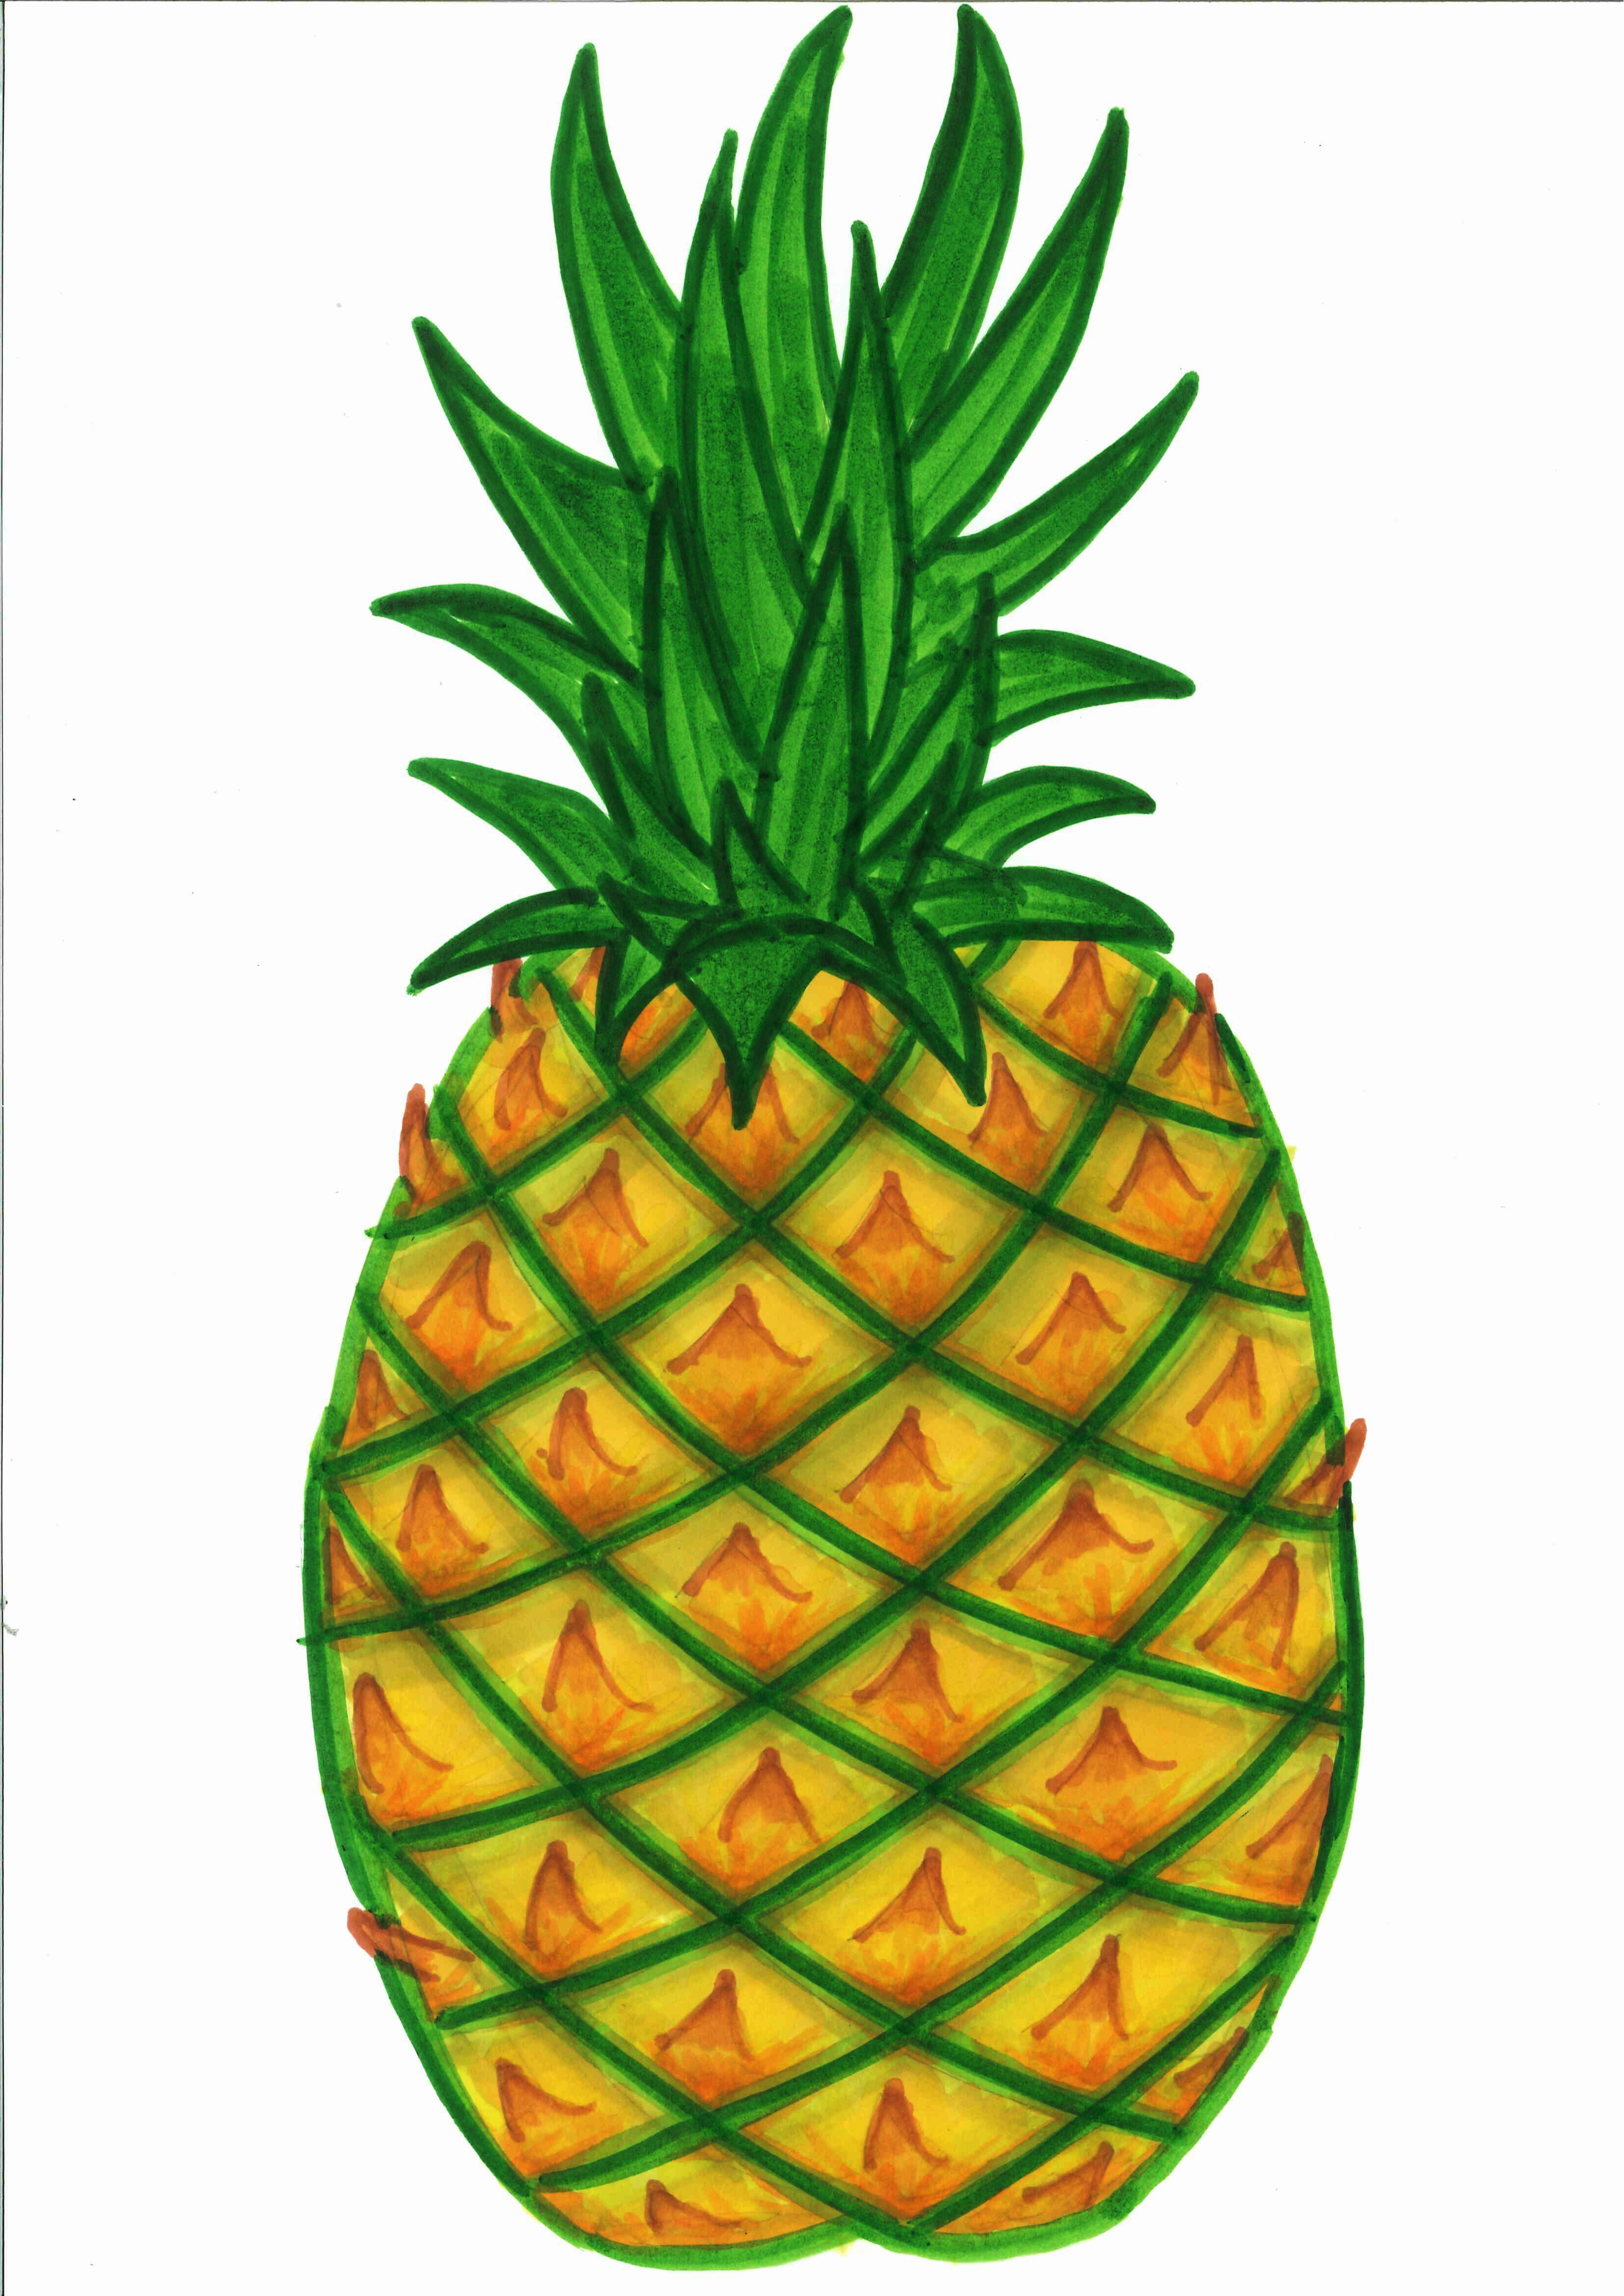 Pineapple clip art free free 